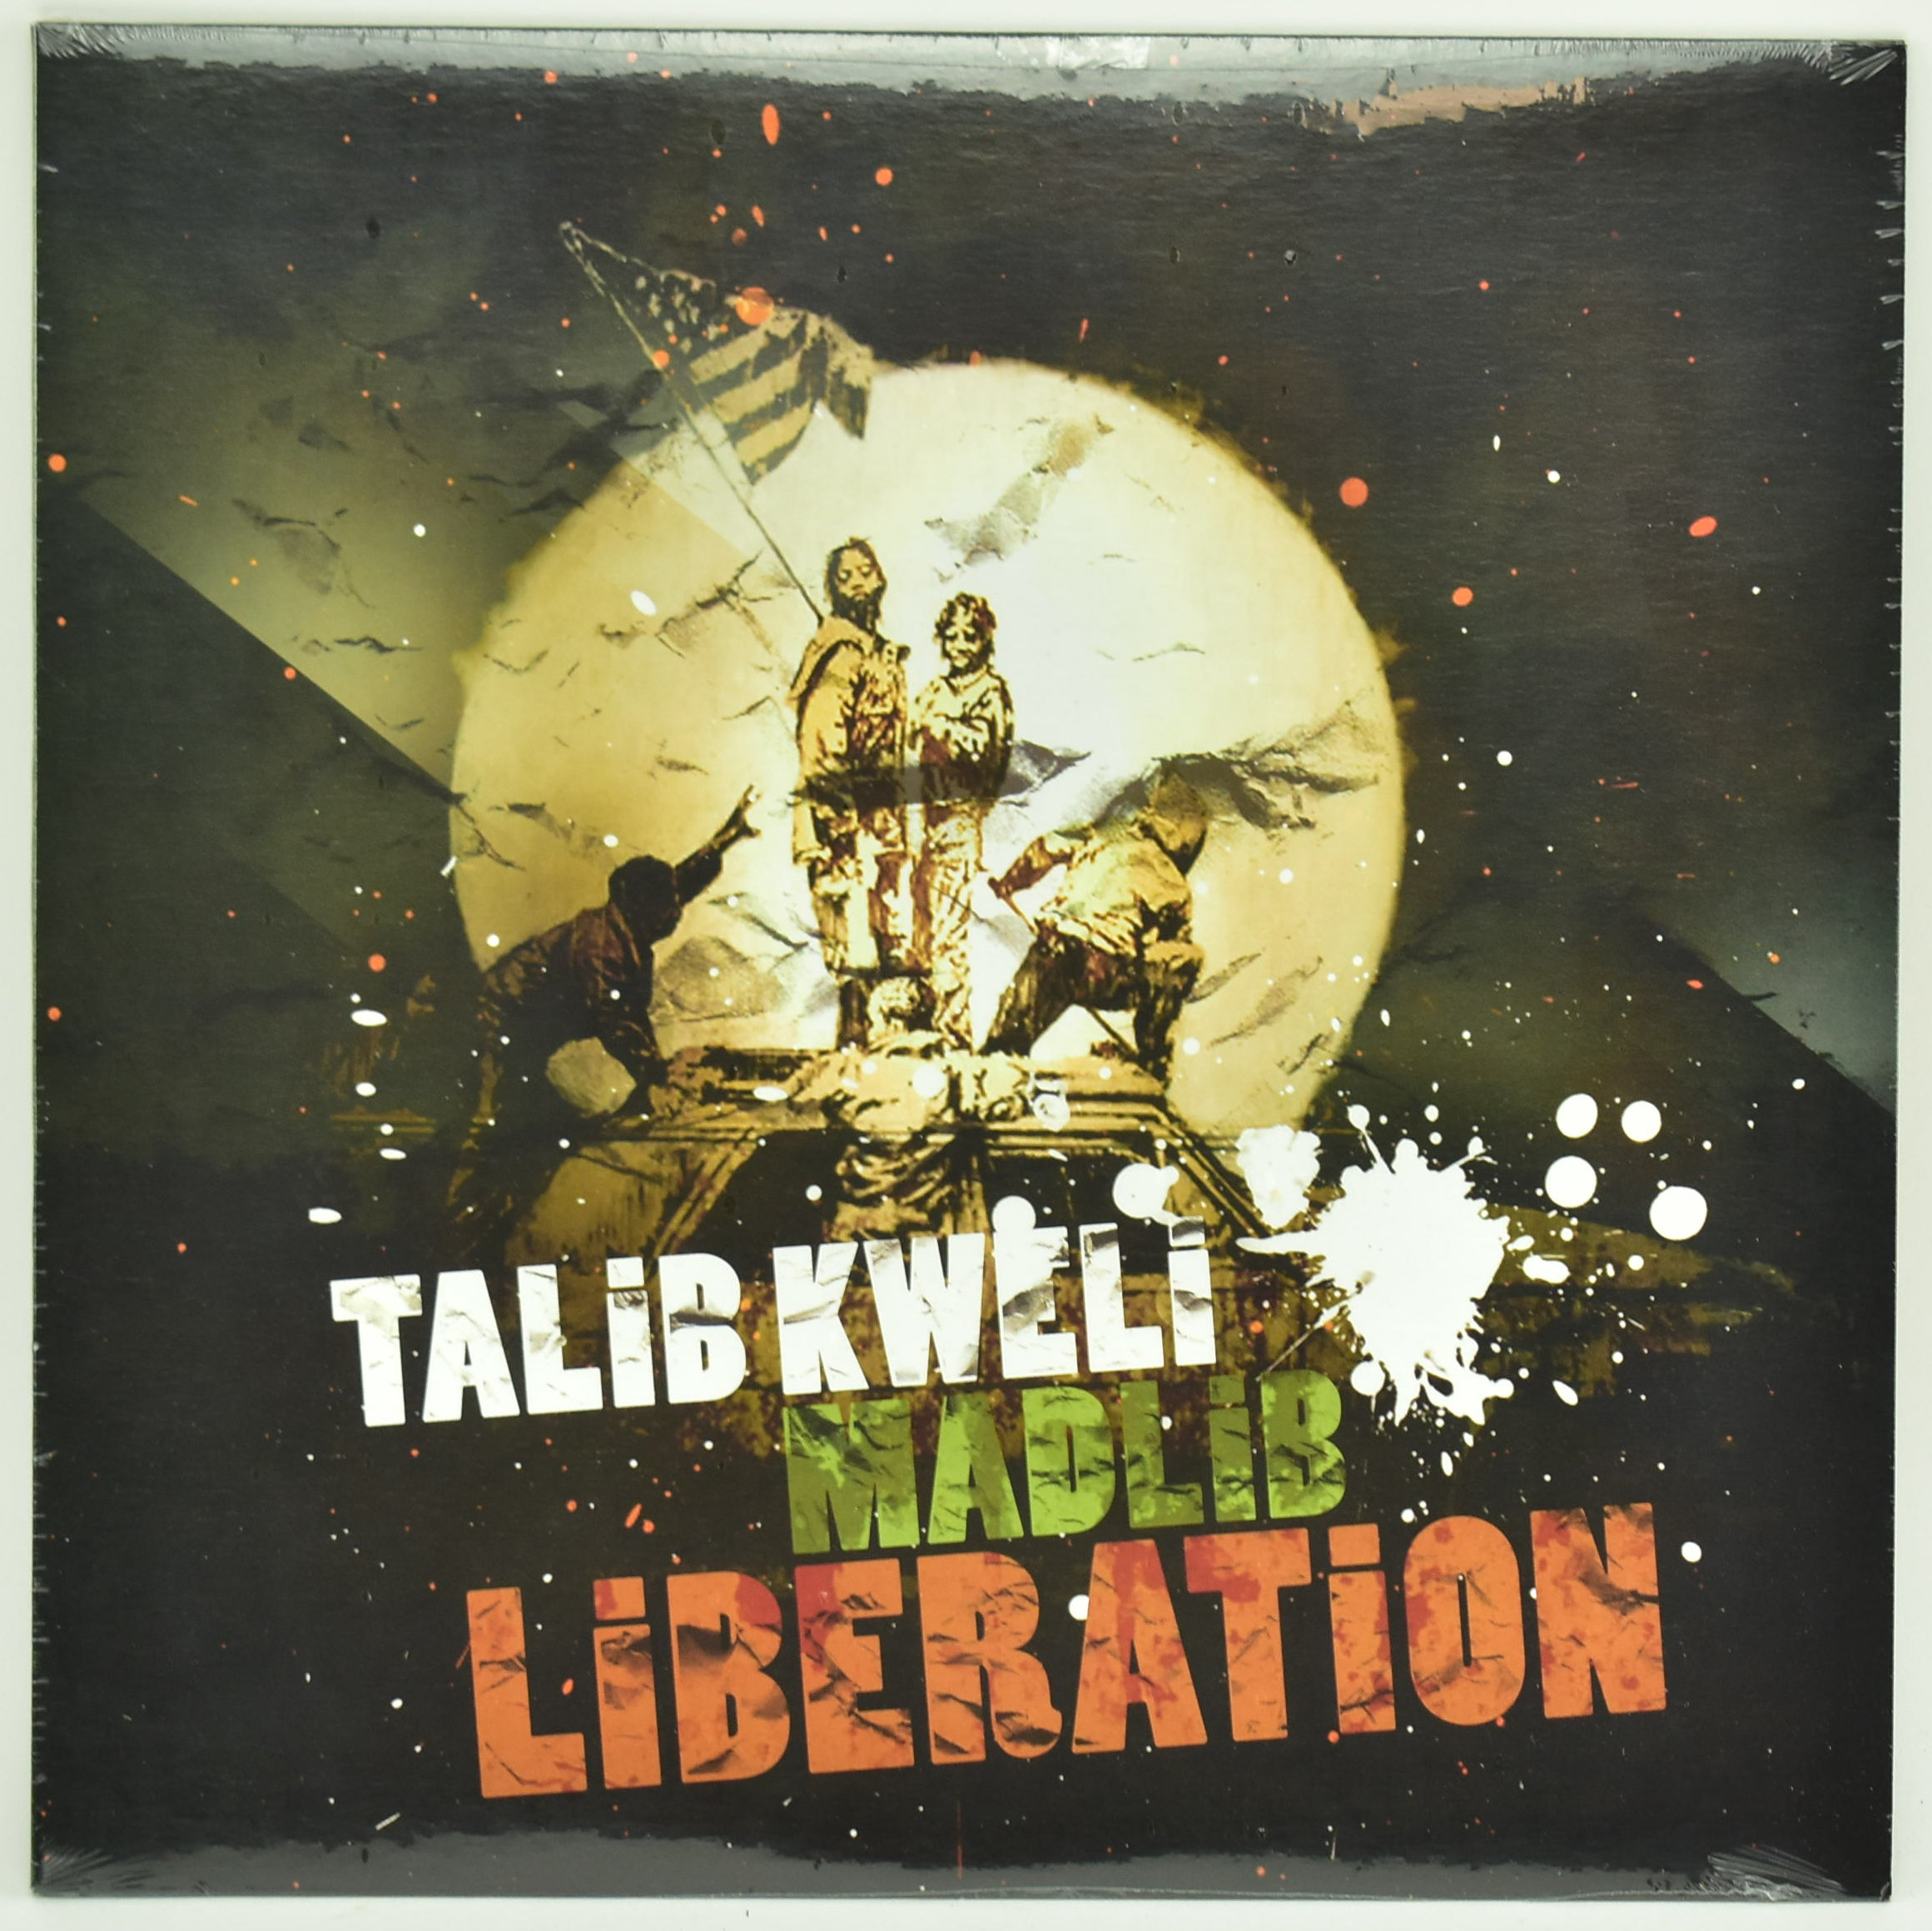 TALIB KWELI & MADLIB - LIBERATION VINYL LP - BANKSY COVER ART